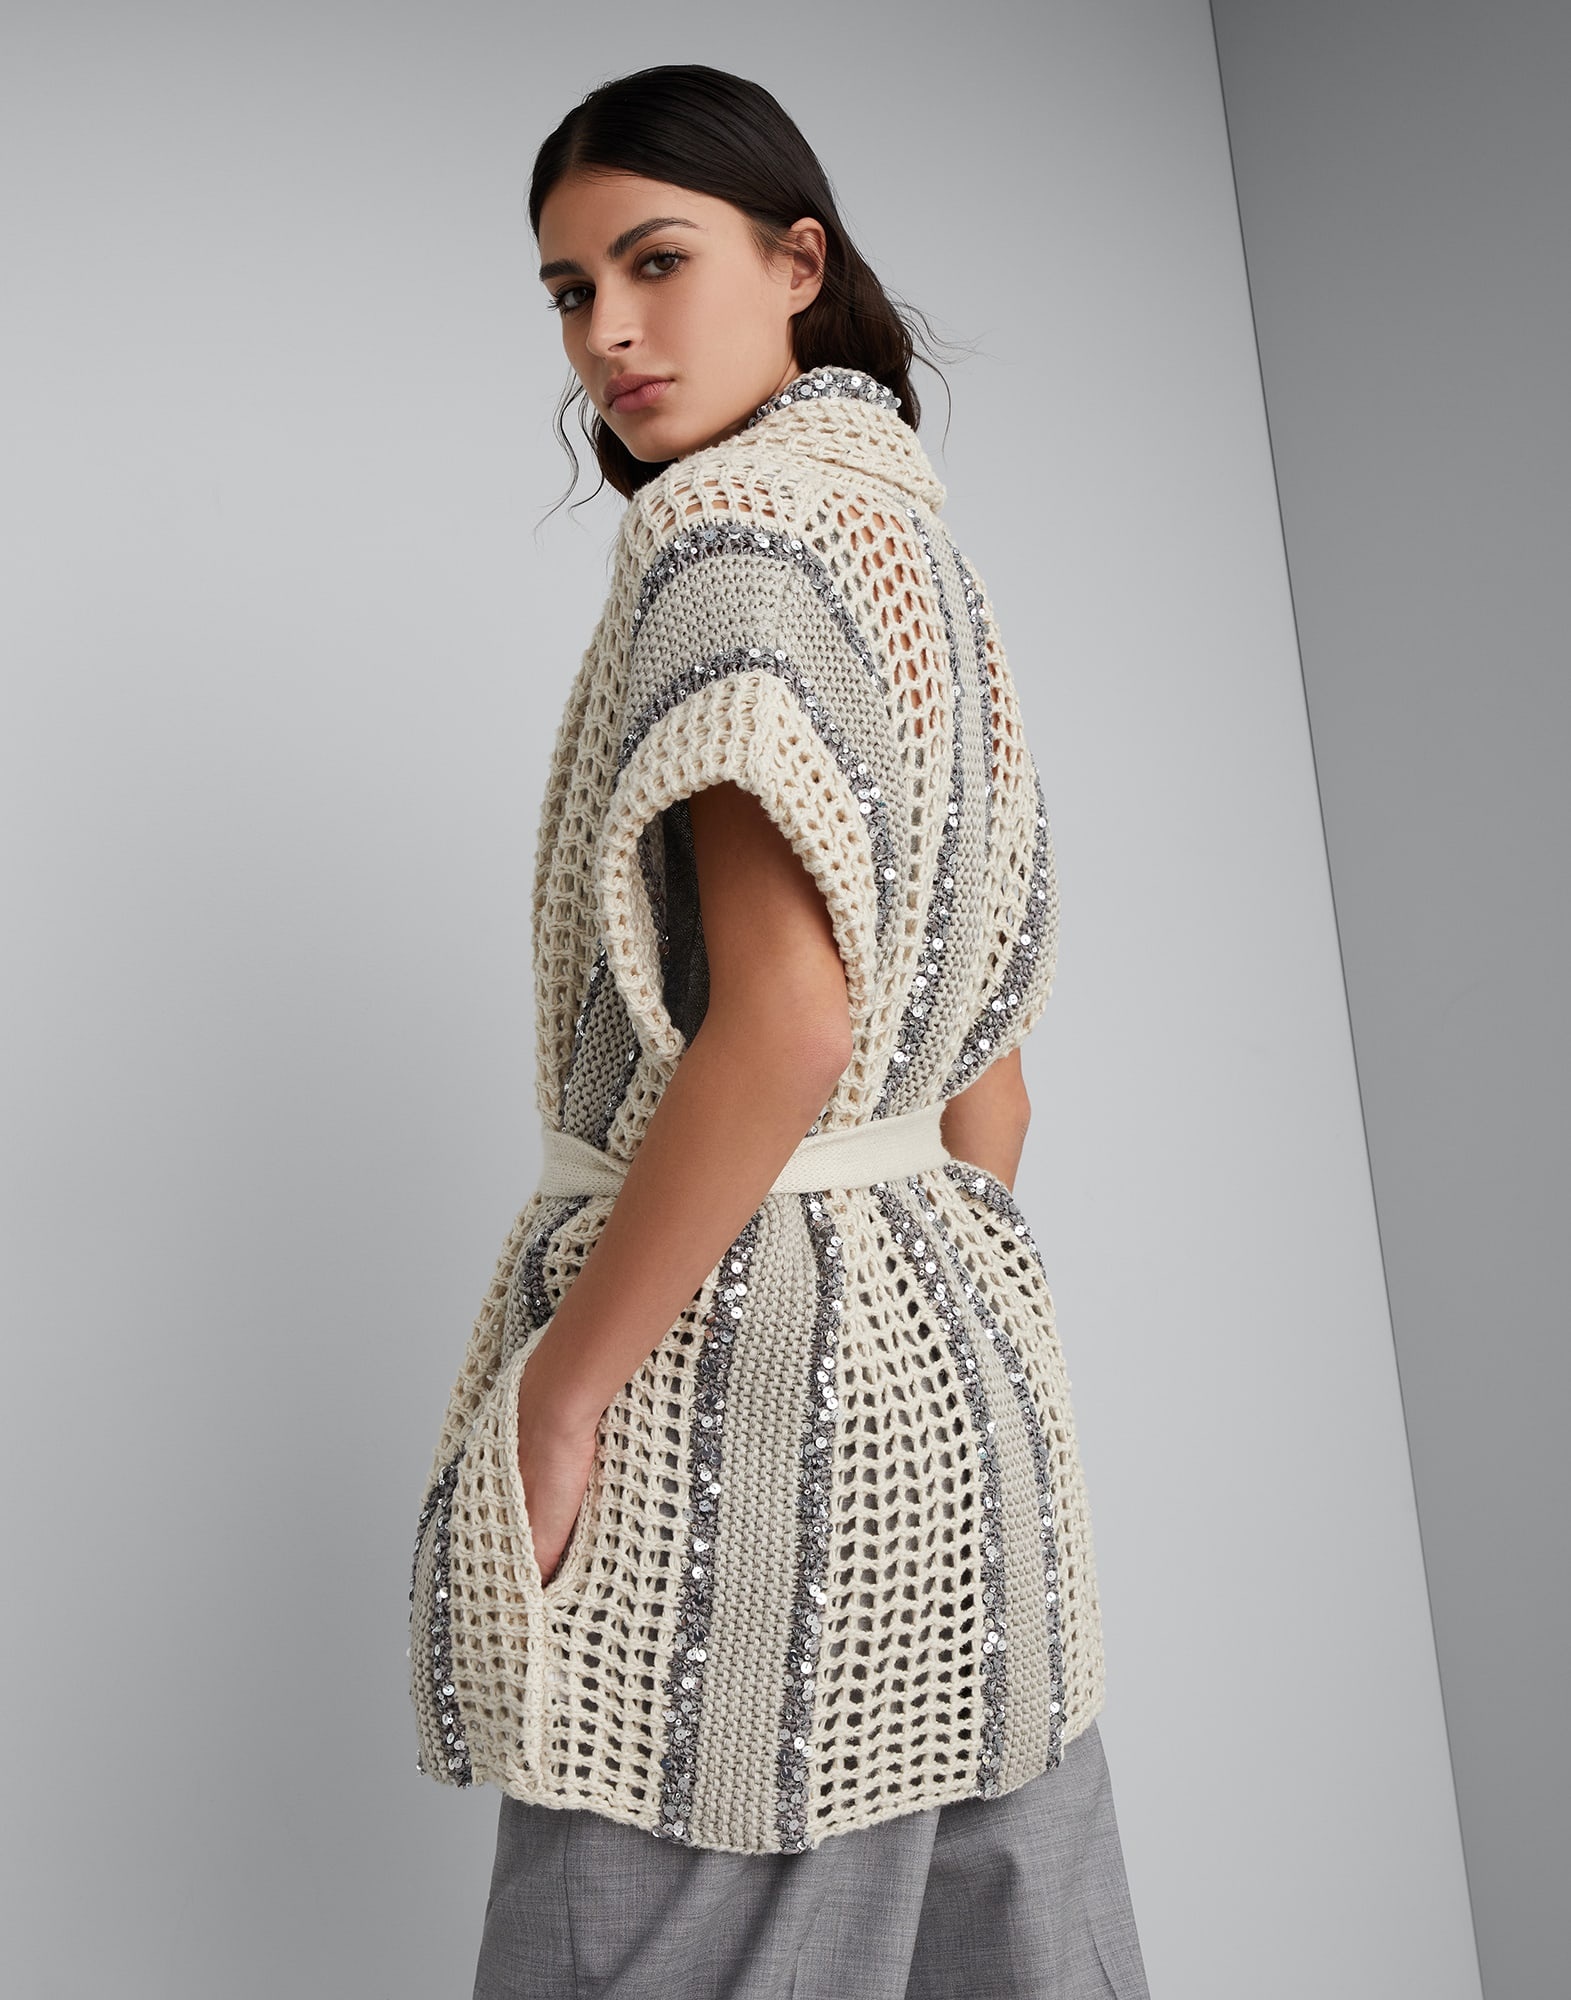 Dazzling stripe net knit cardigan in jute, linen, cotton and silk with belt - 2